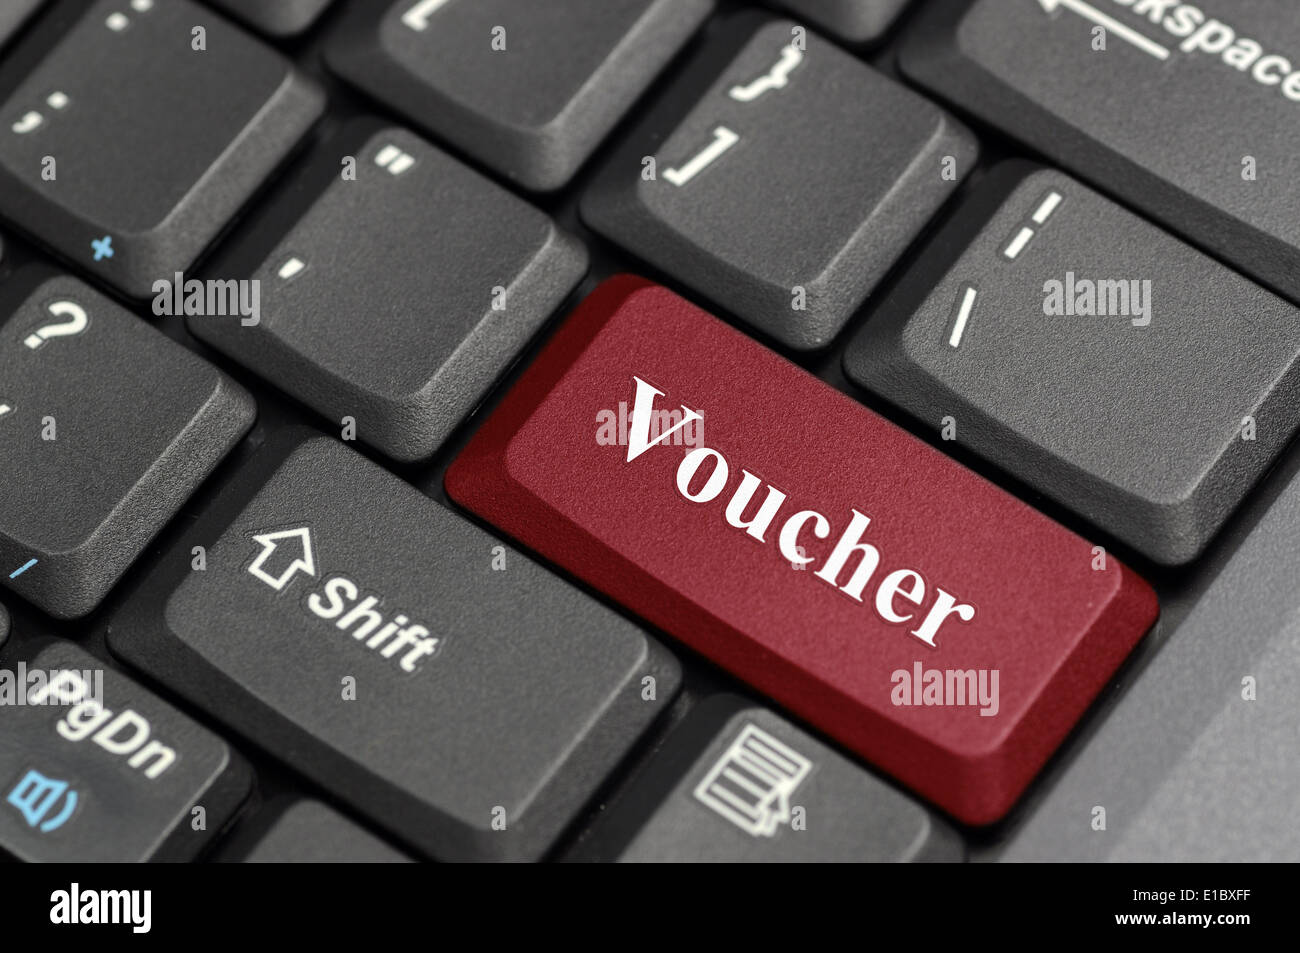 Red voucher key on keyboard Stock Photo